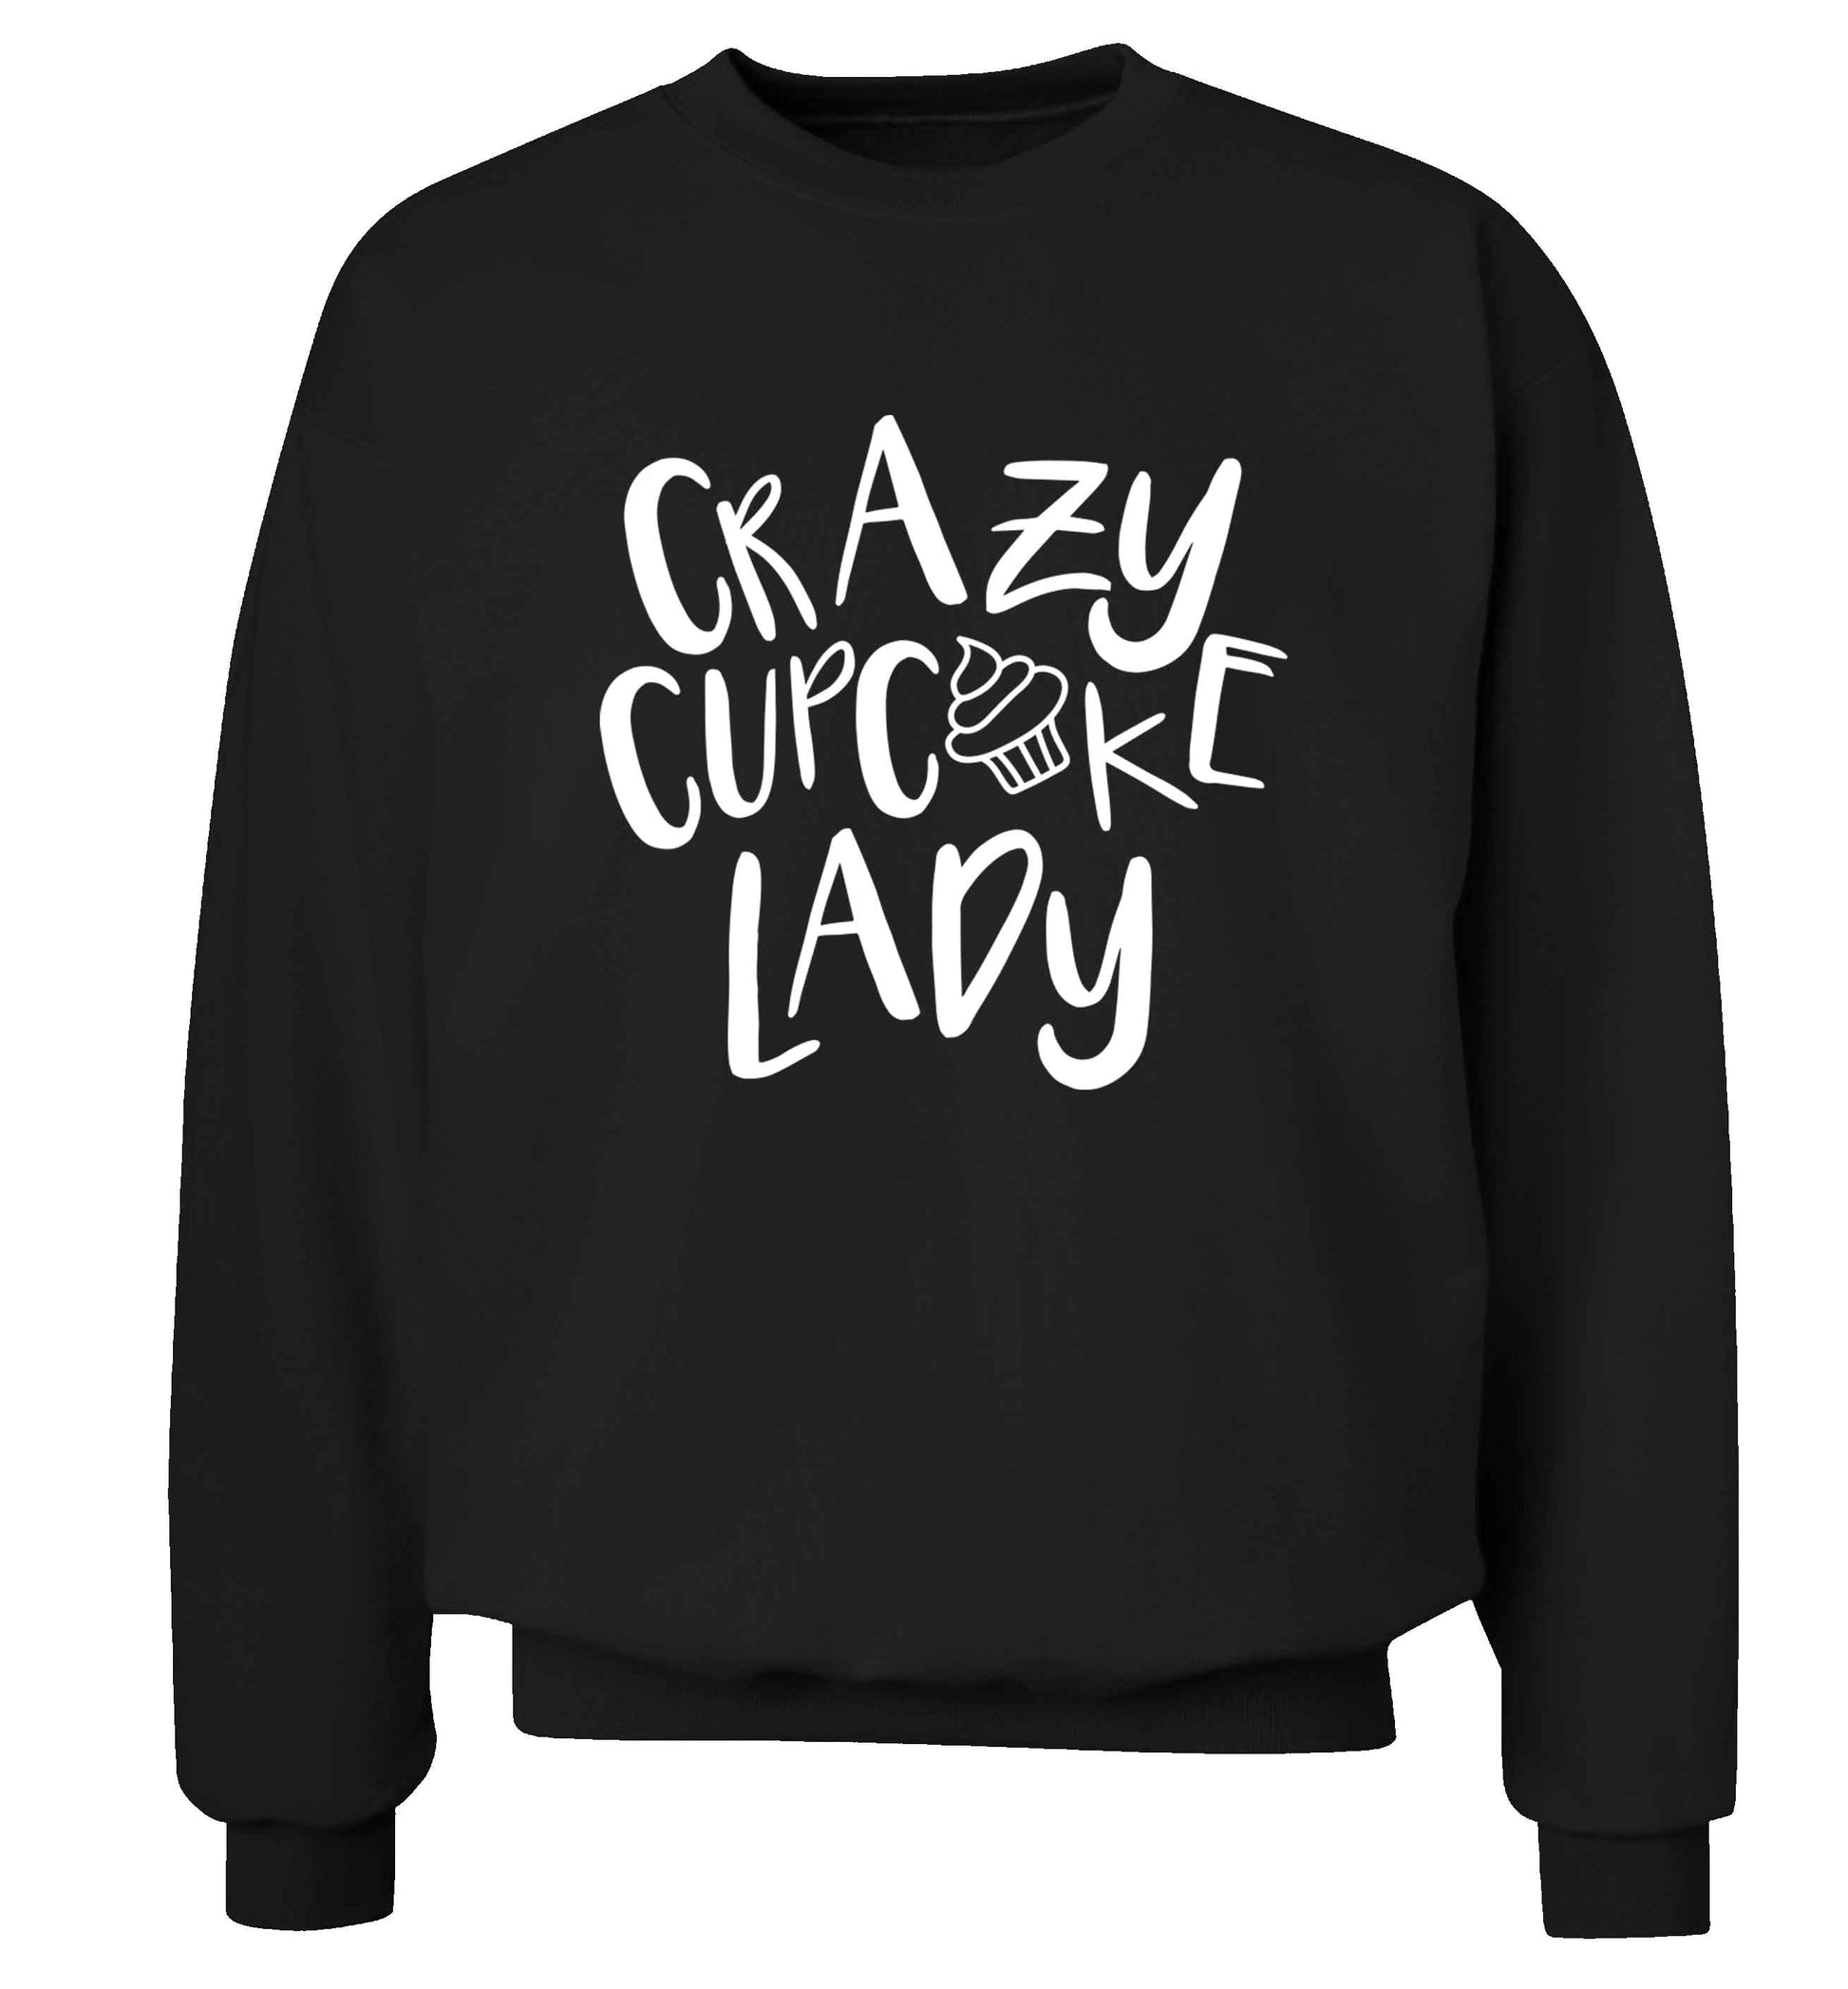 Crazy cupcake lady Adult's unisex black Sweater 2XL